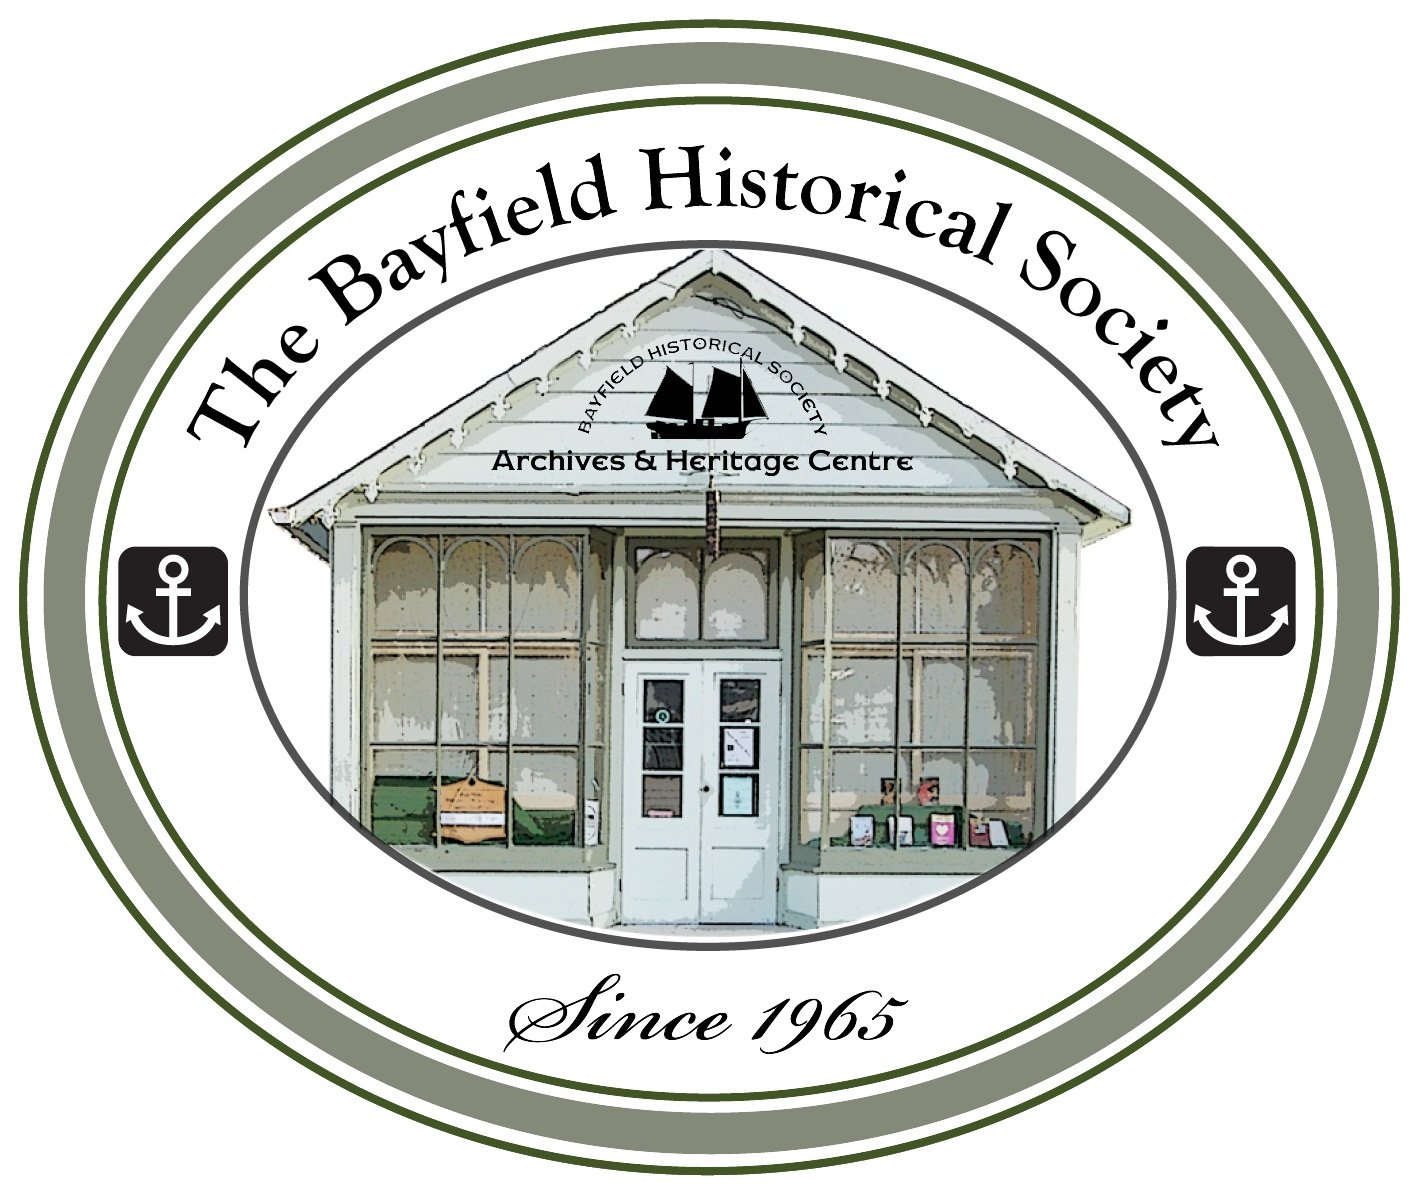 Bayfield Historical Society